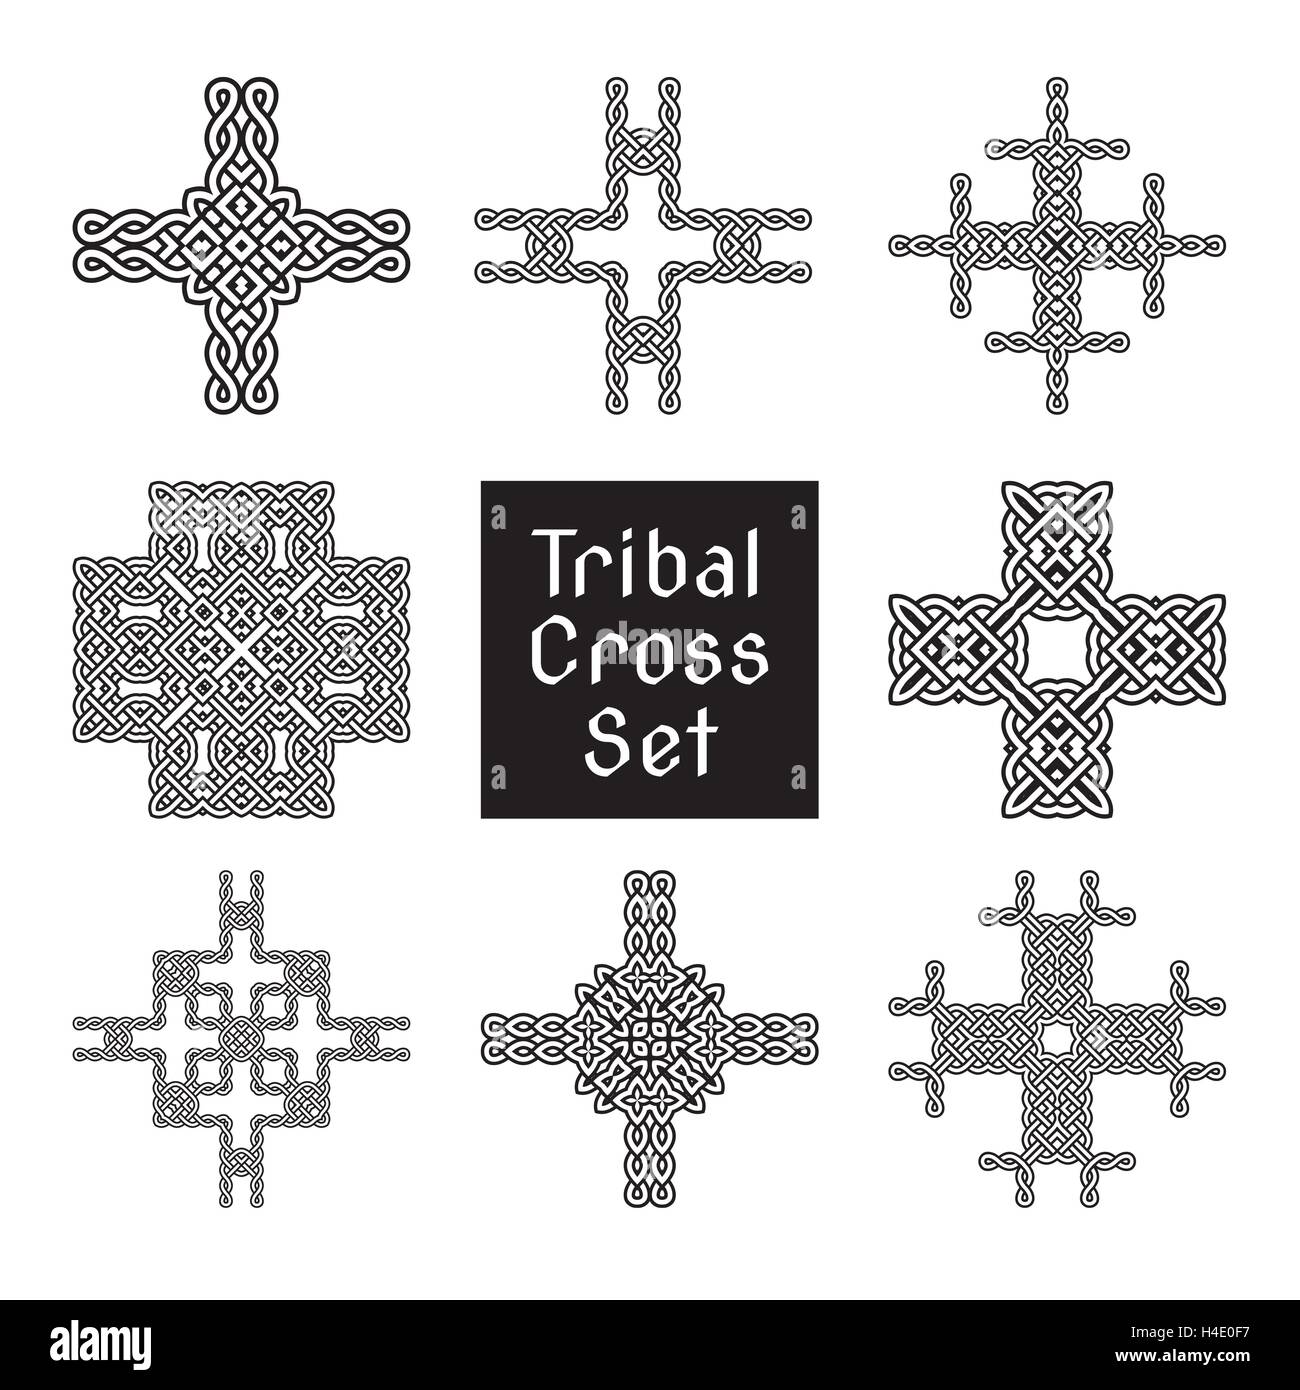 tribal cross set ancient ornament vector illustration Stock Vector